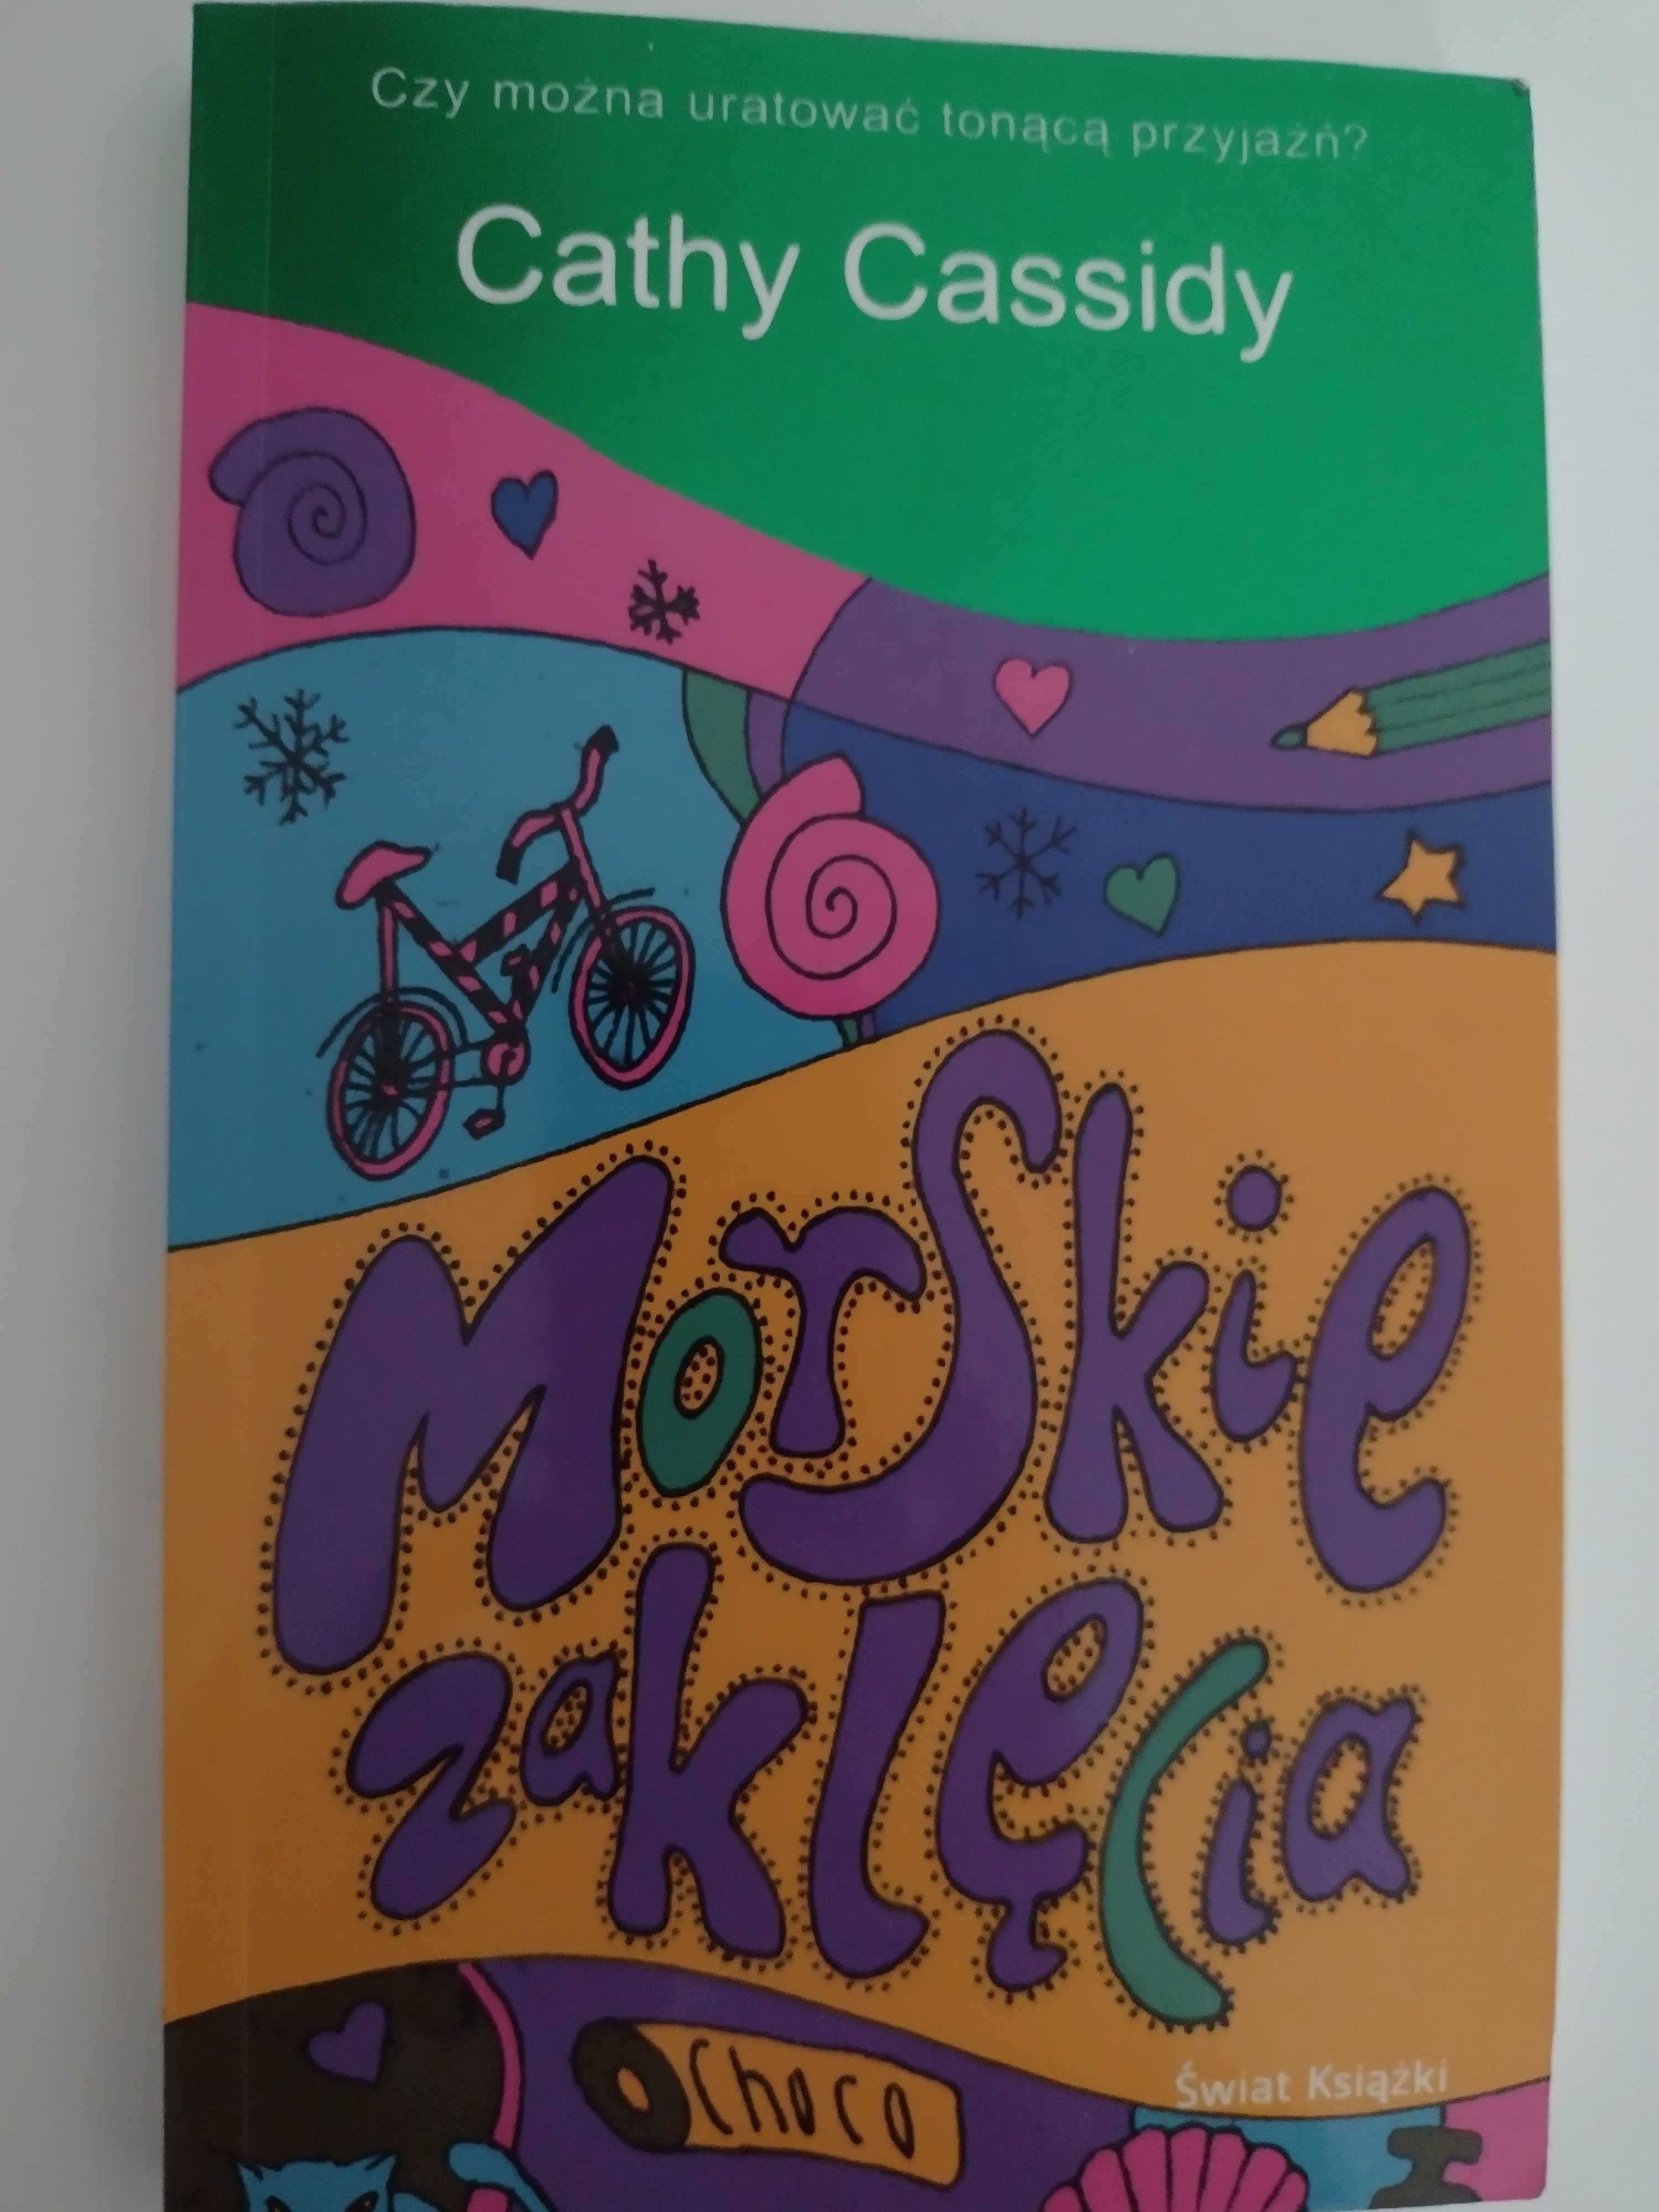 Cathy Cassidy "Morskie zaklęcia" i "Dizzy"